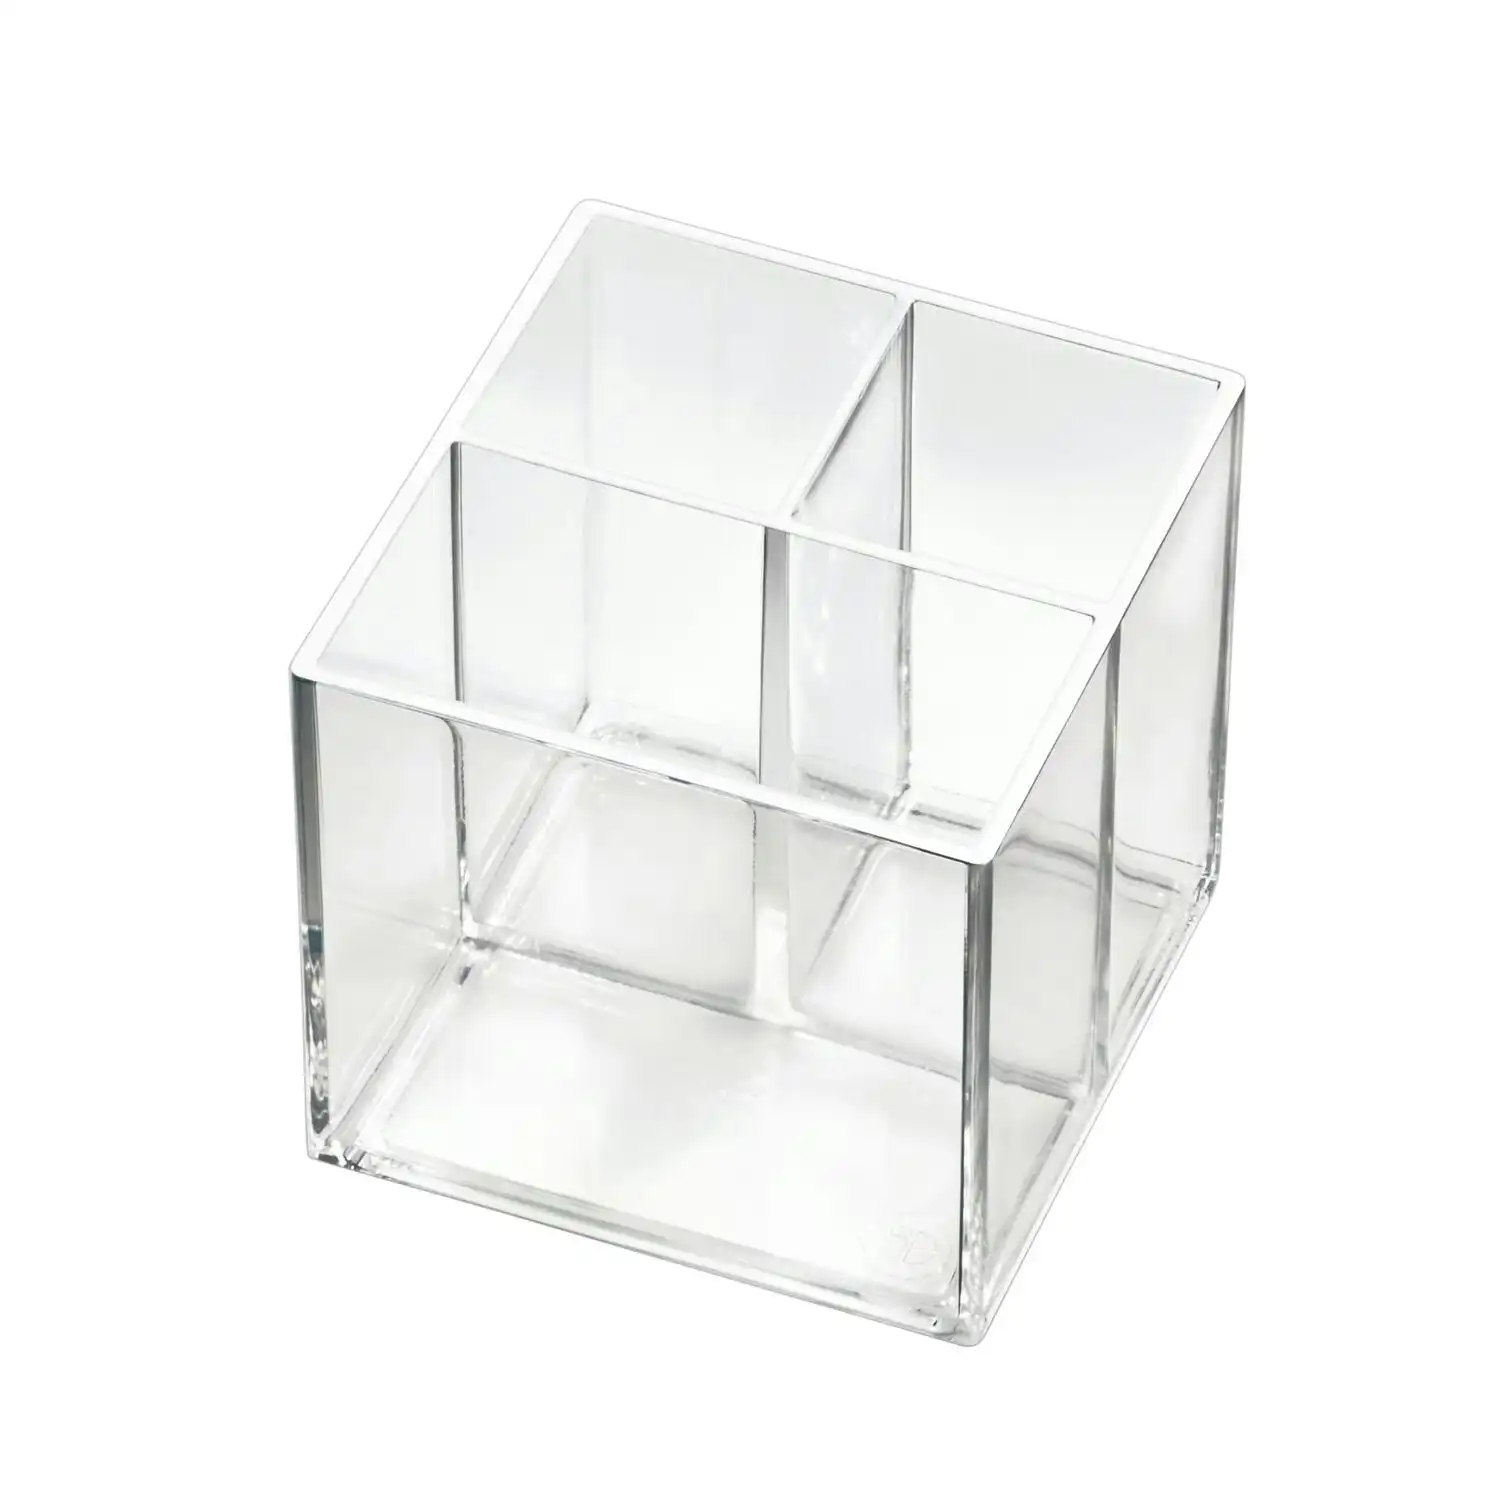 Idesign 10.79x10.16cm Cosmetic Cube Makeup Holder Organiser Clear/Matte White